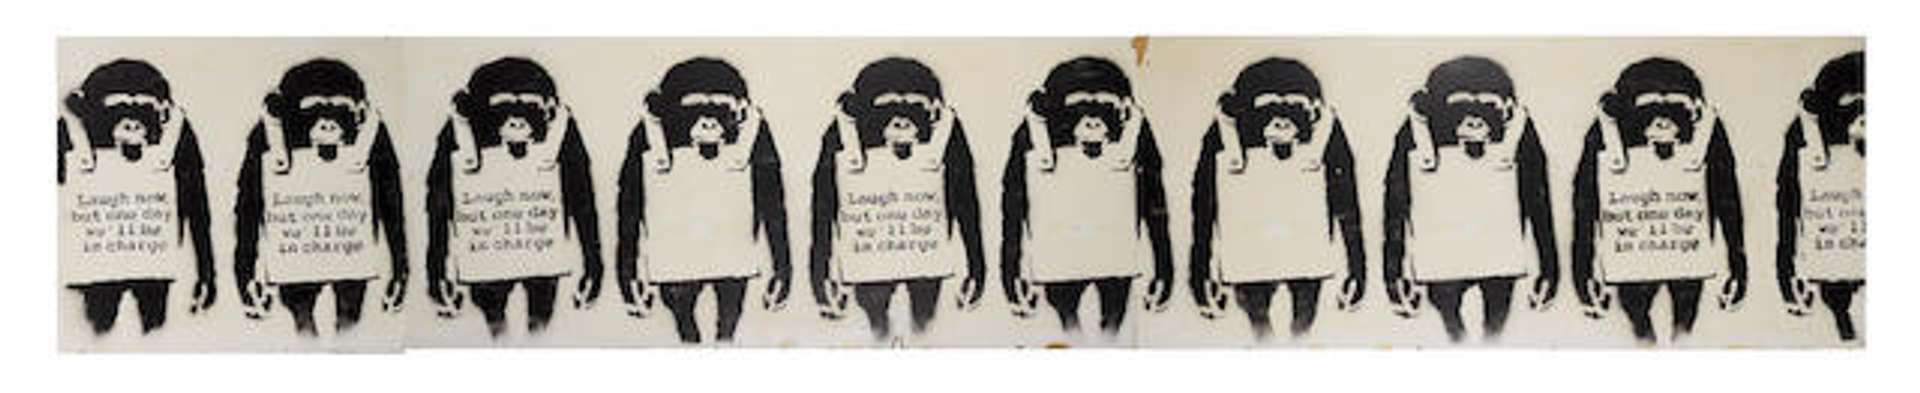 Laugh Now by Banksy - MyArtBroker